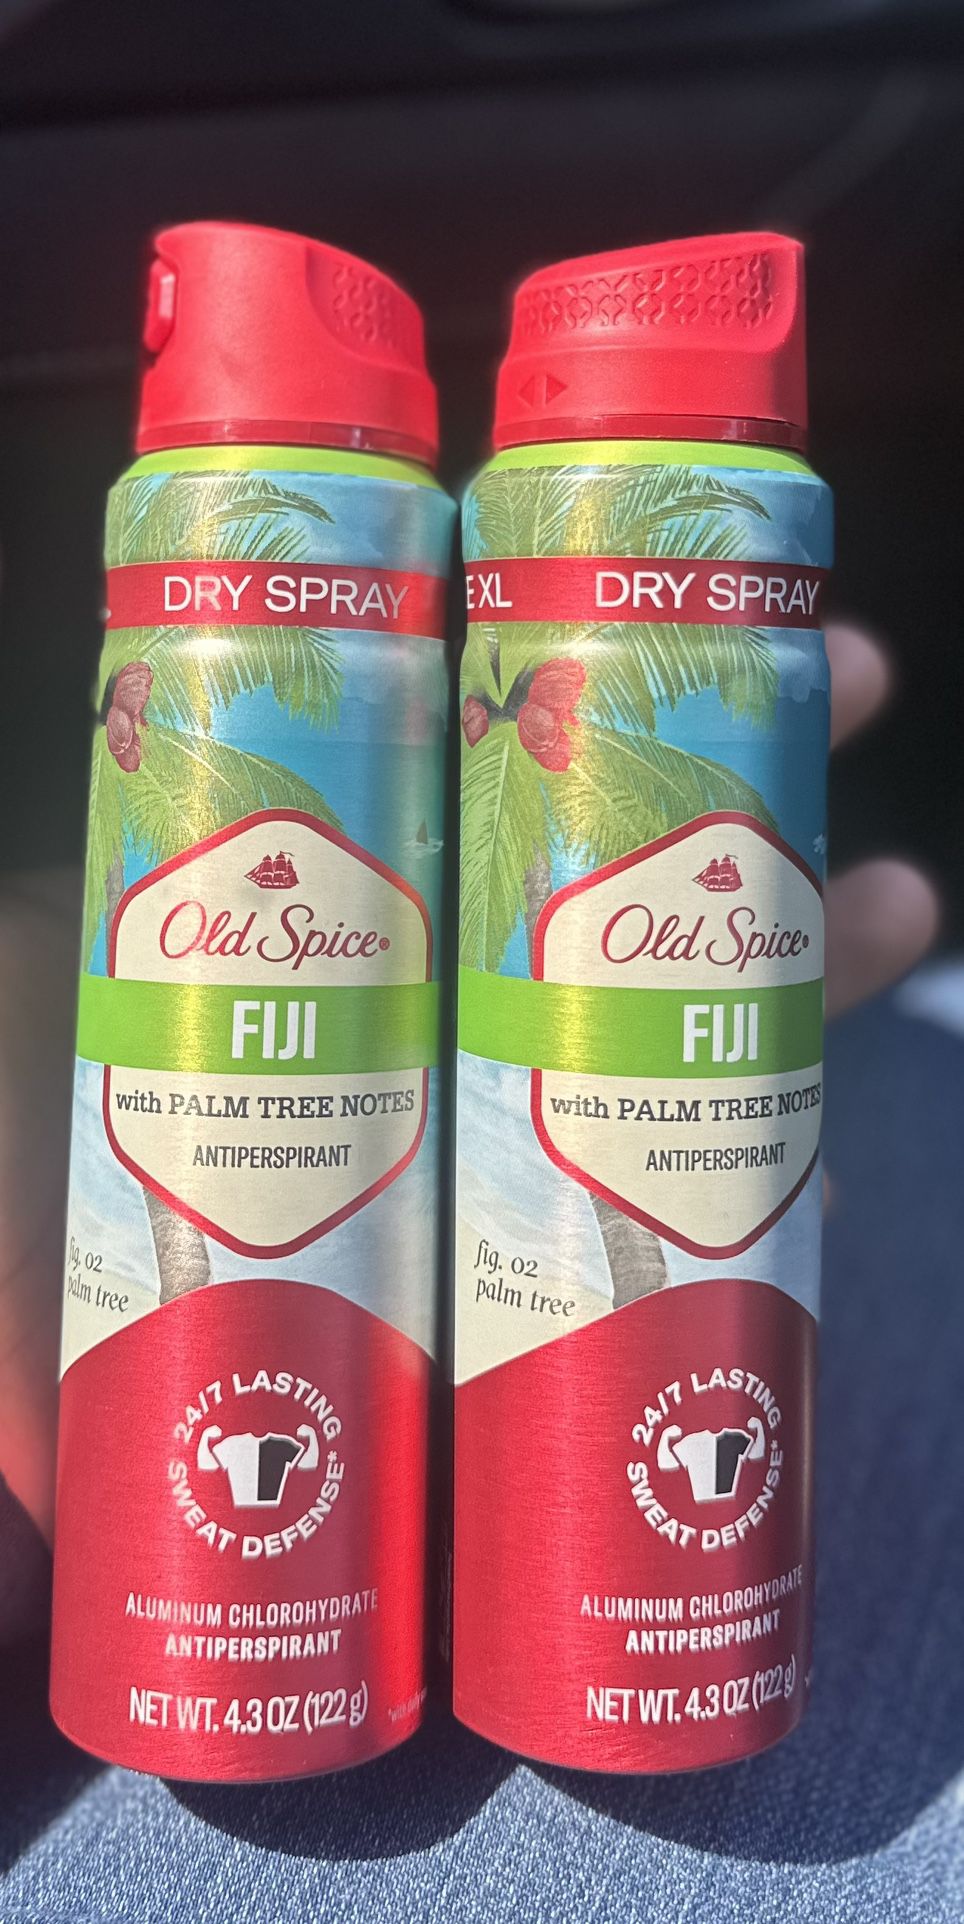 Old Spice Fiji Dry Spray 